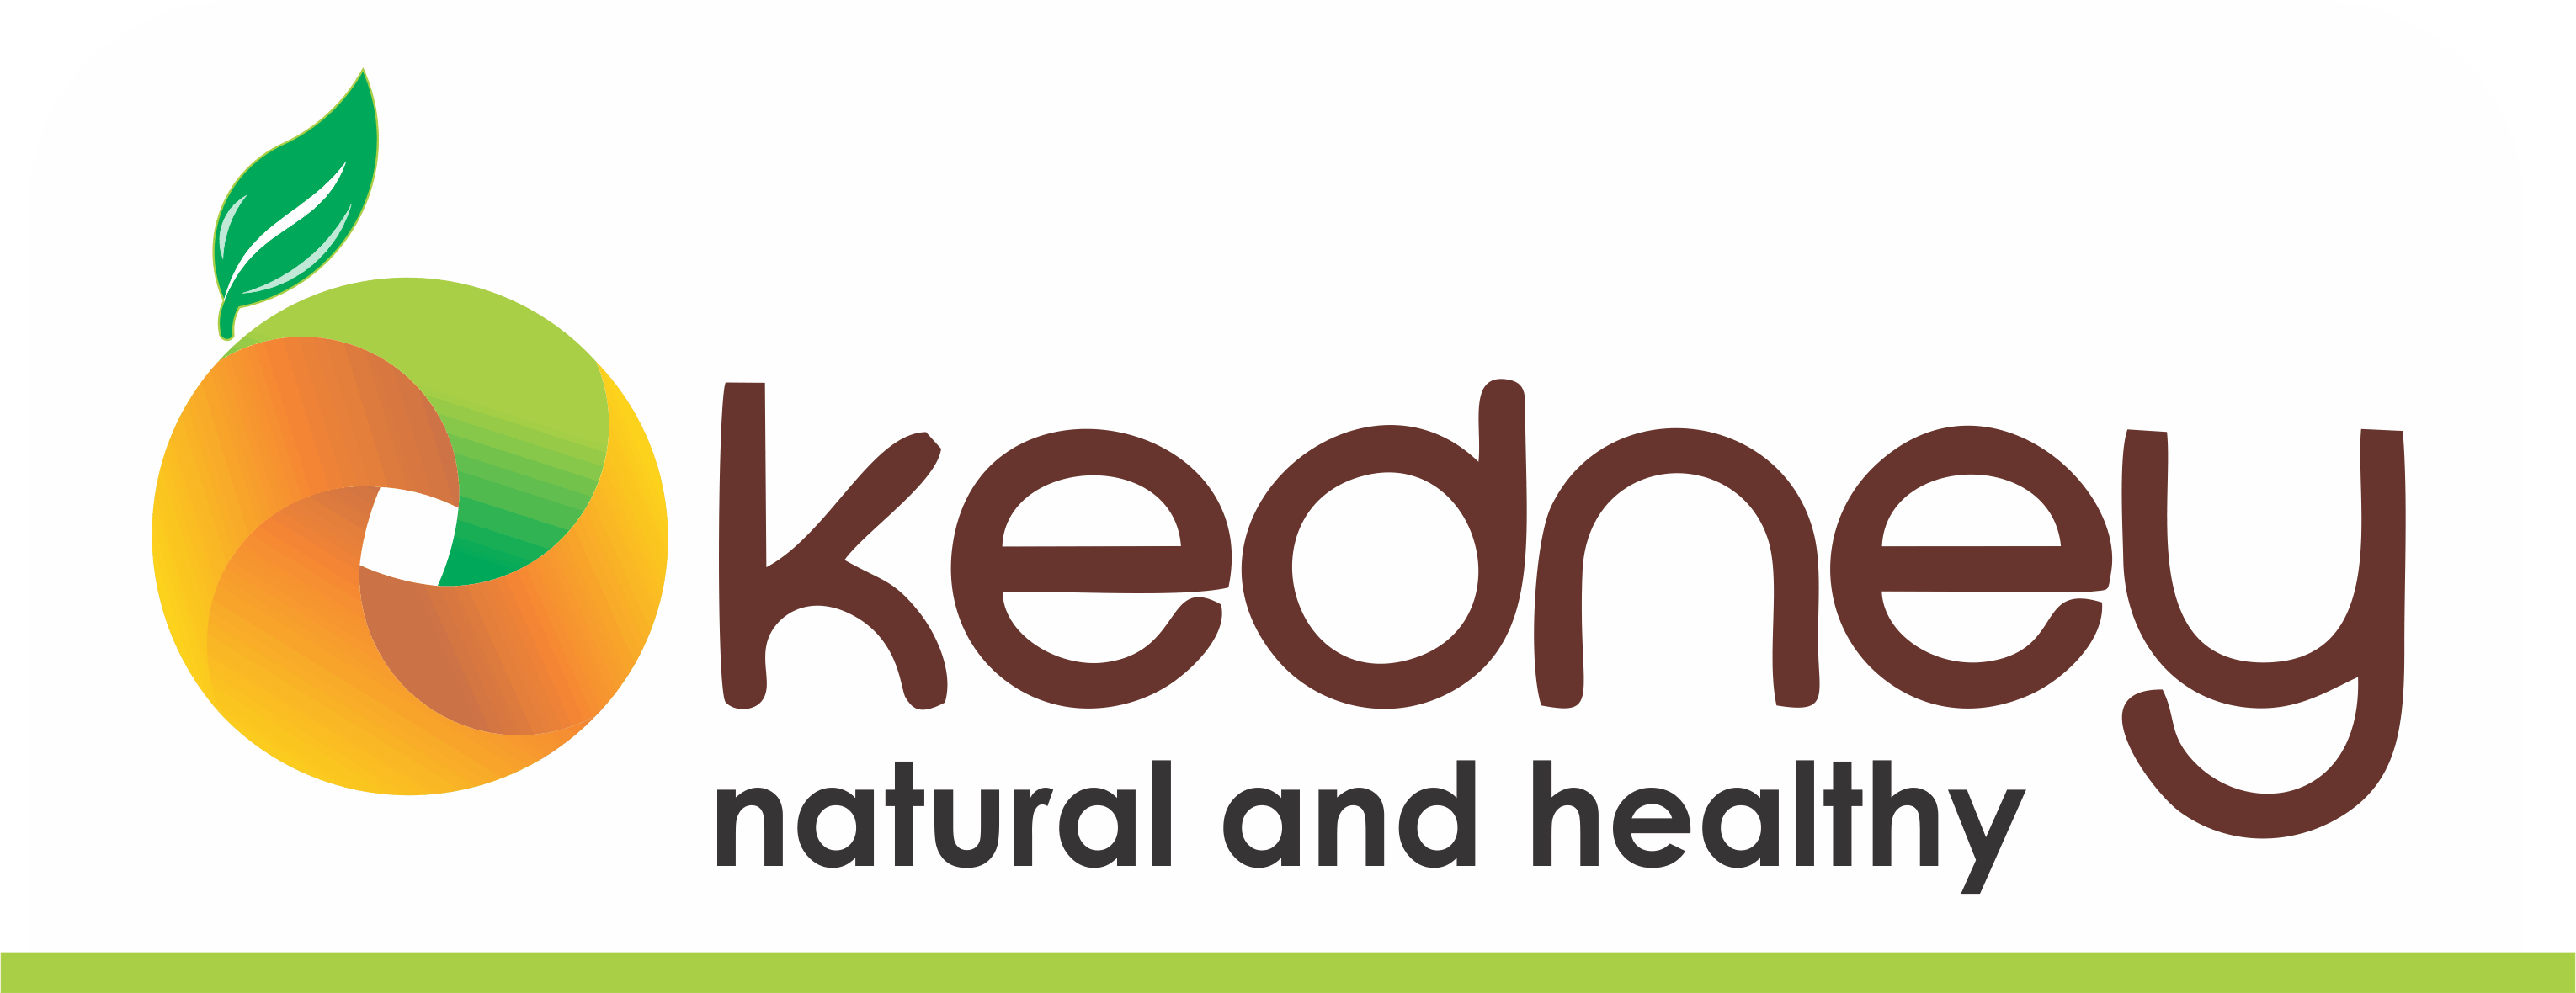 Kedney Foods